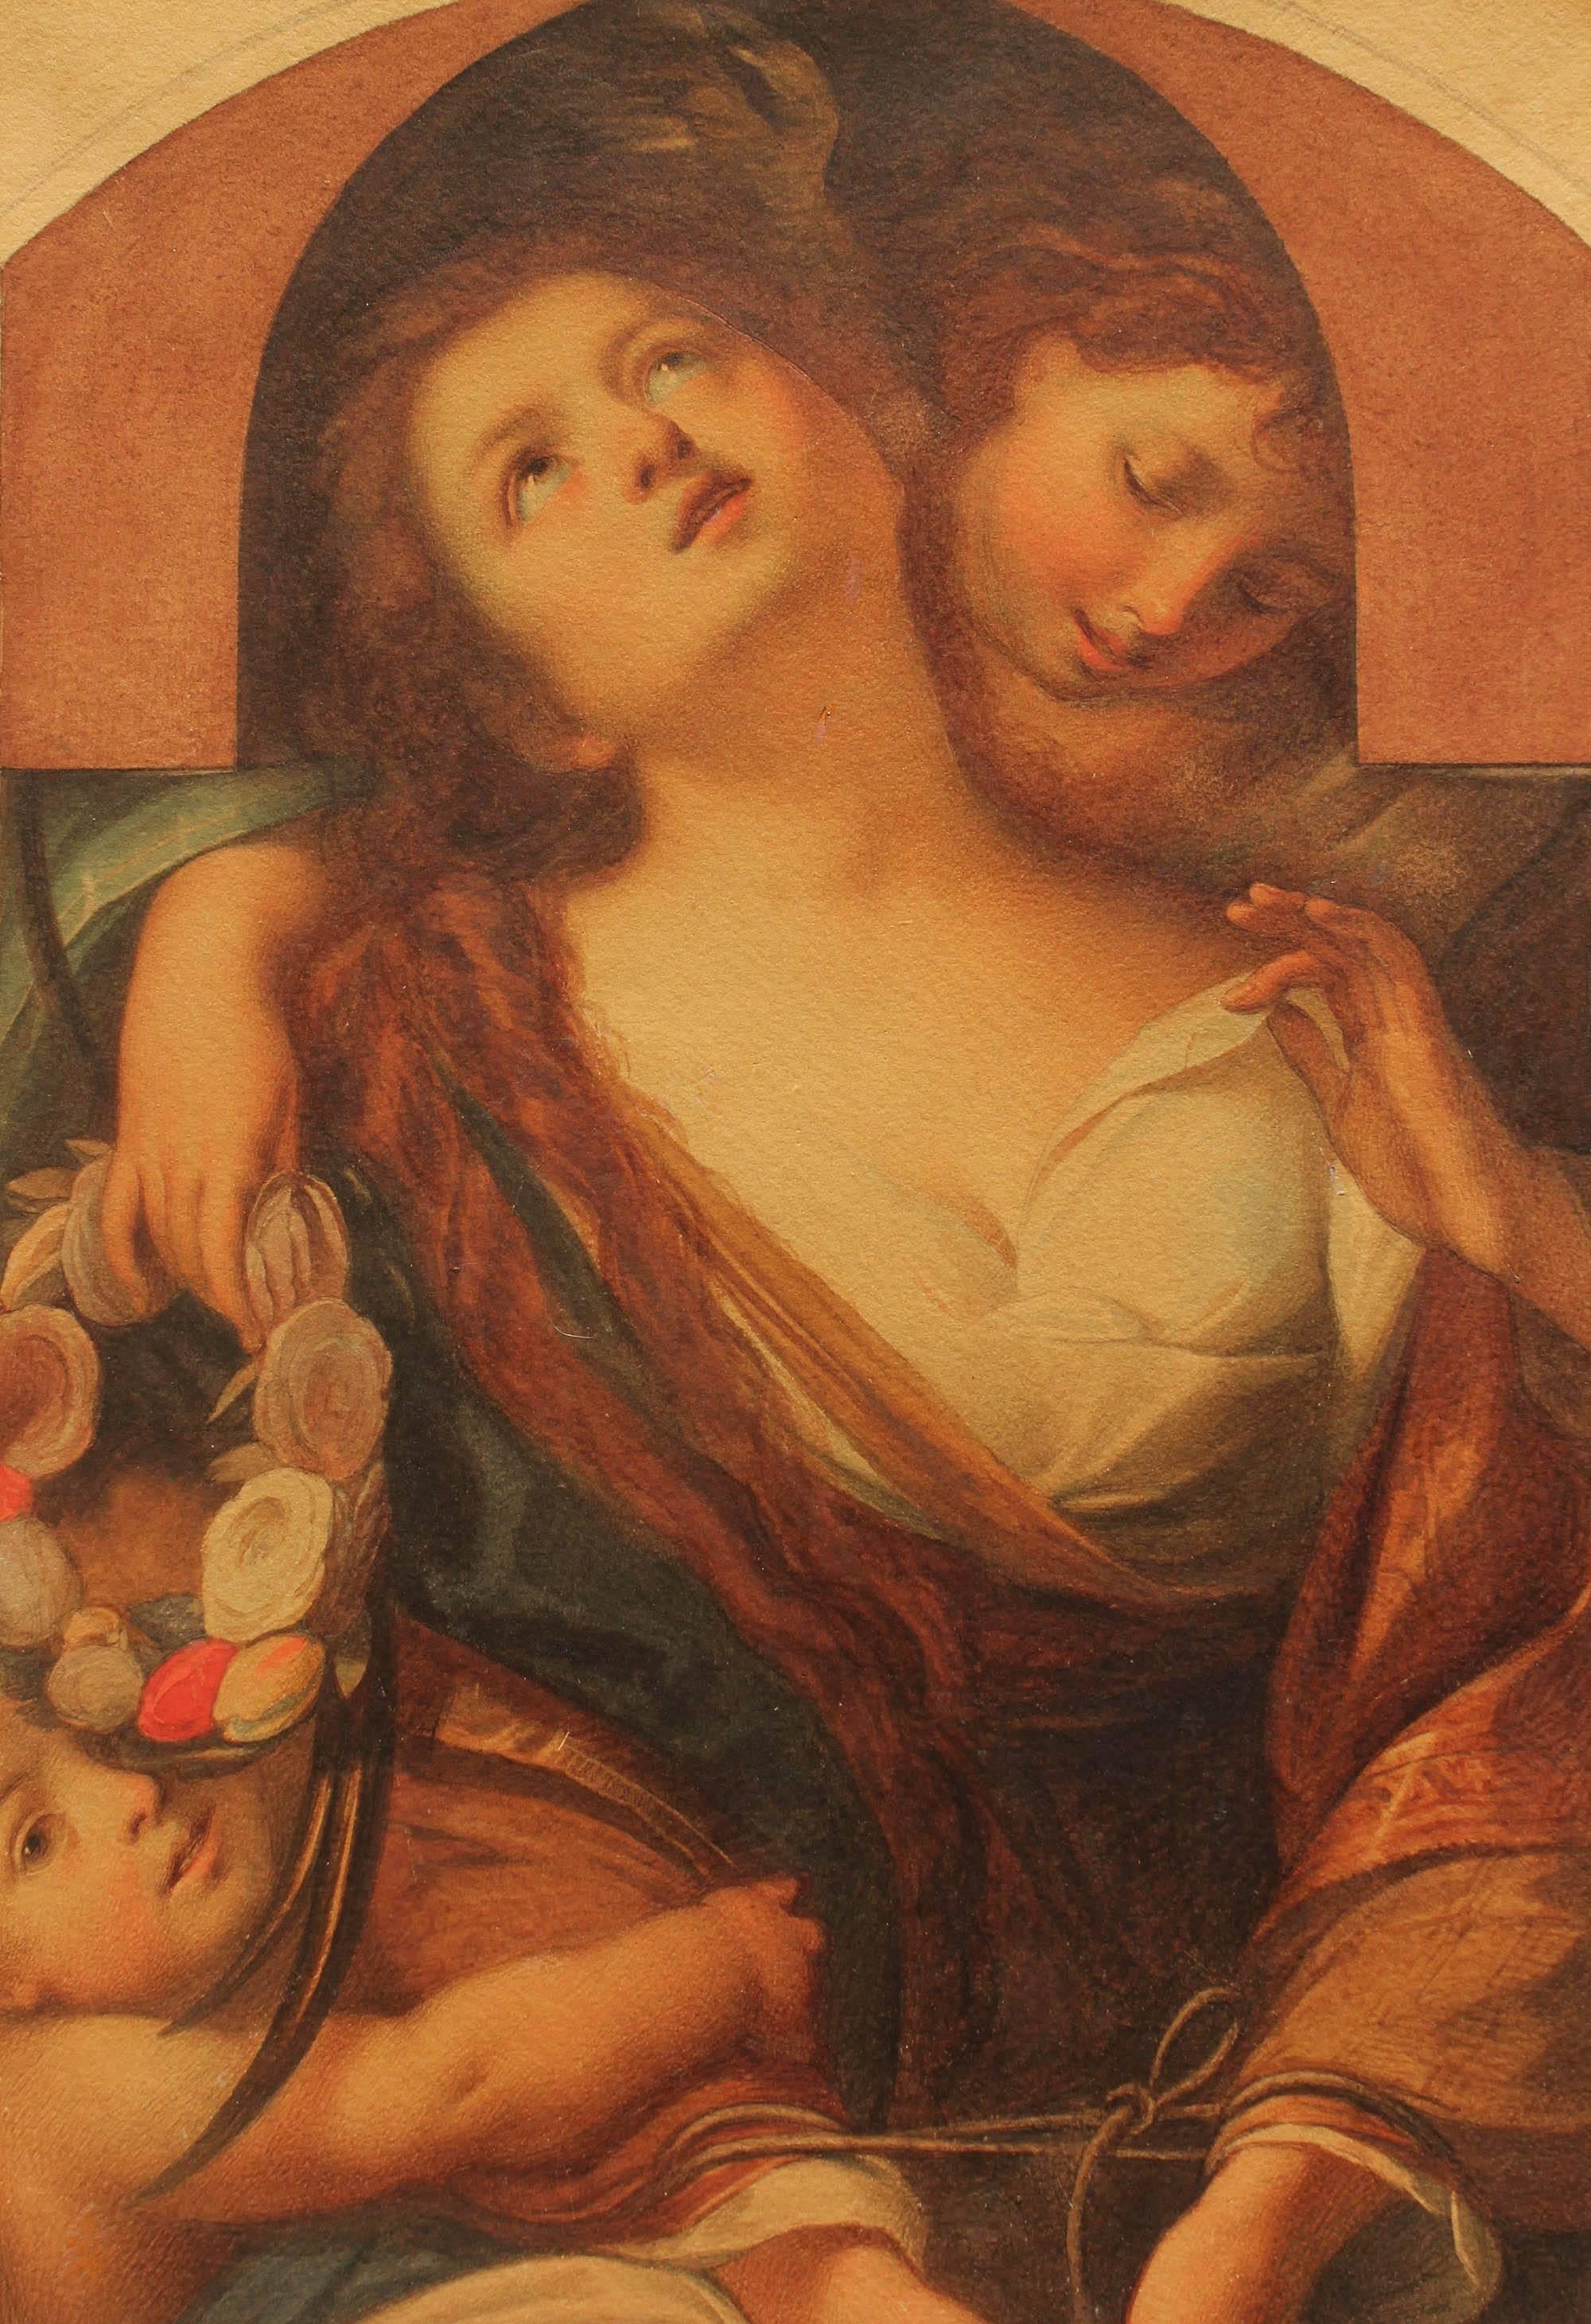 19th century allegorical paintings